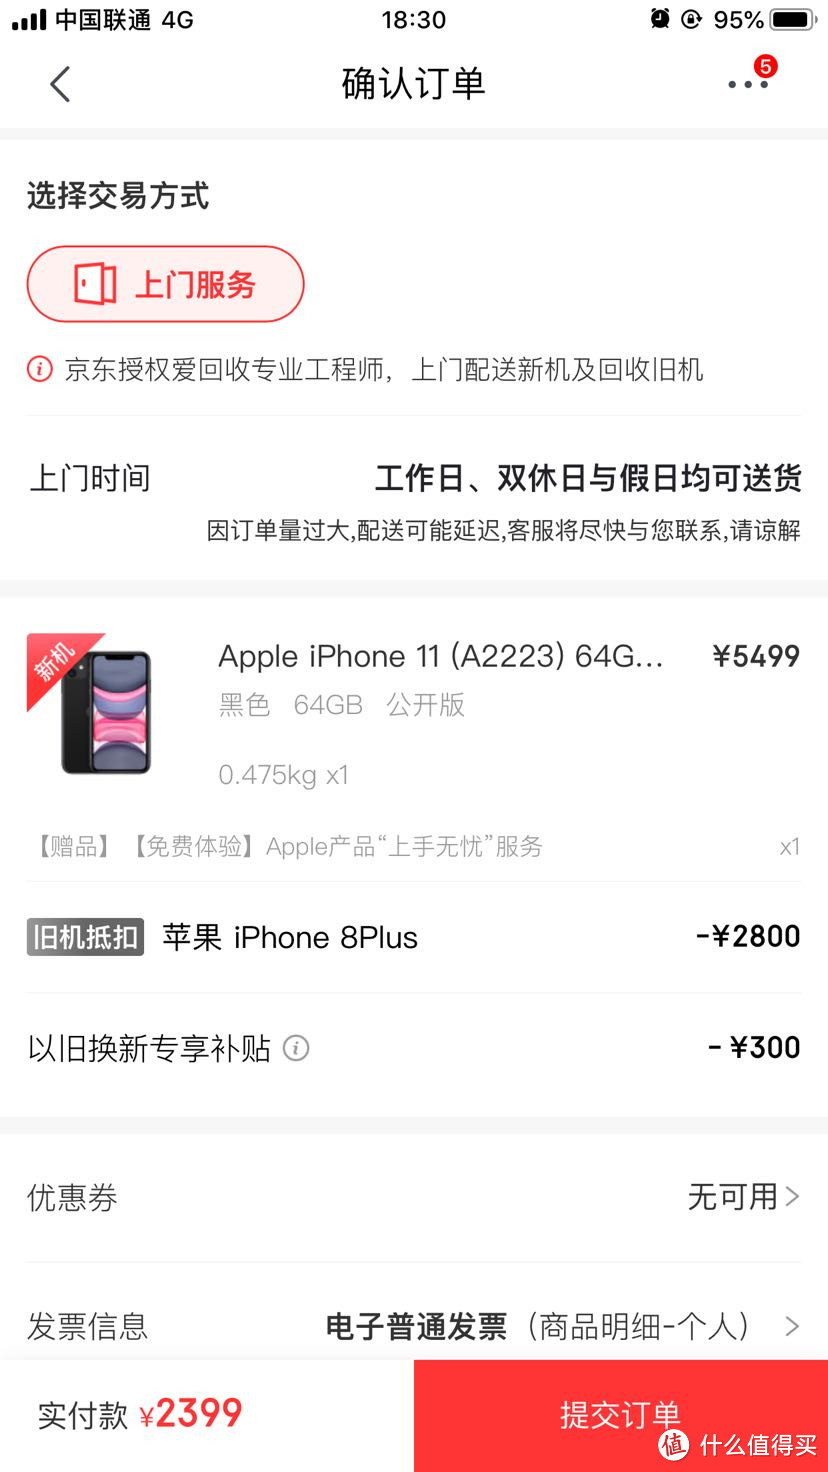 iPhone 8 plus 换 iPhone 11，不要998，只要*